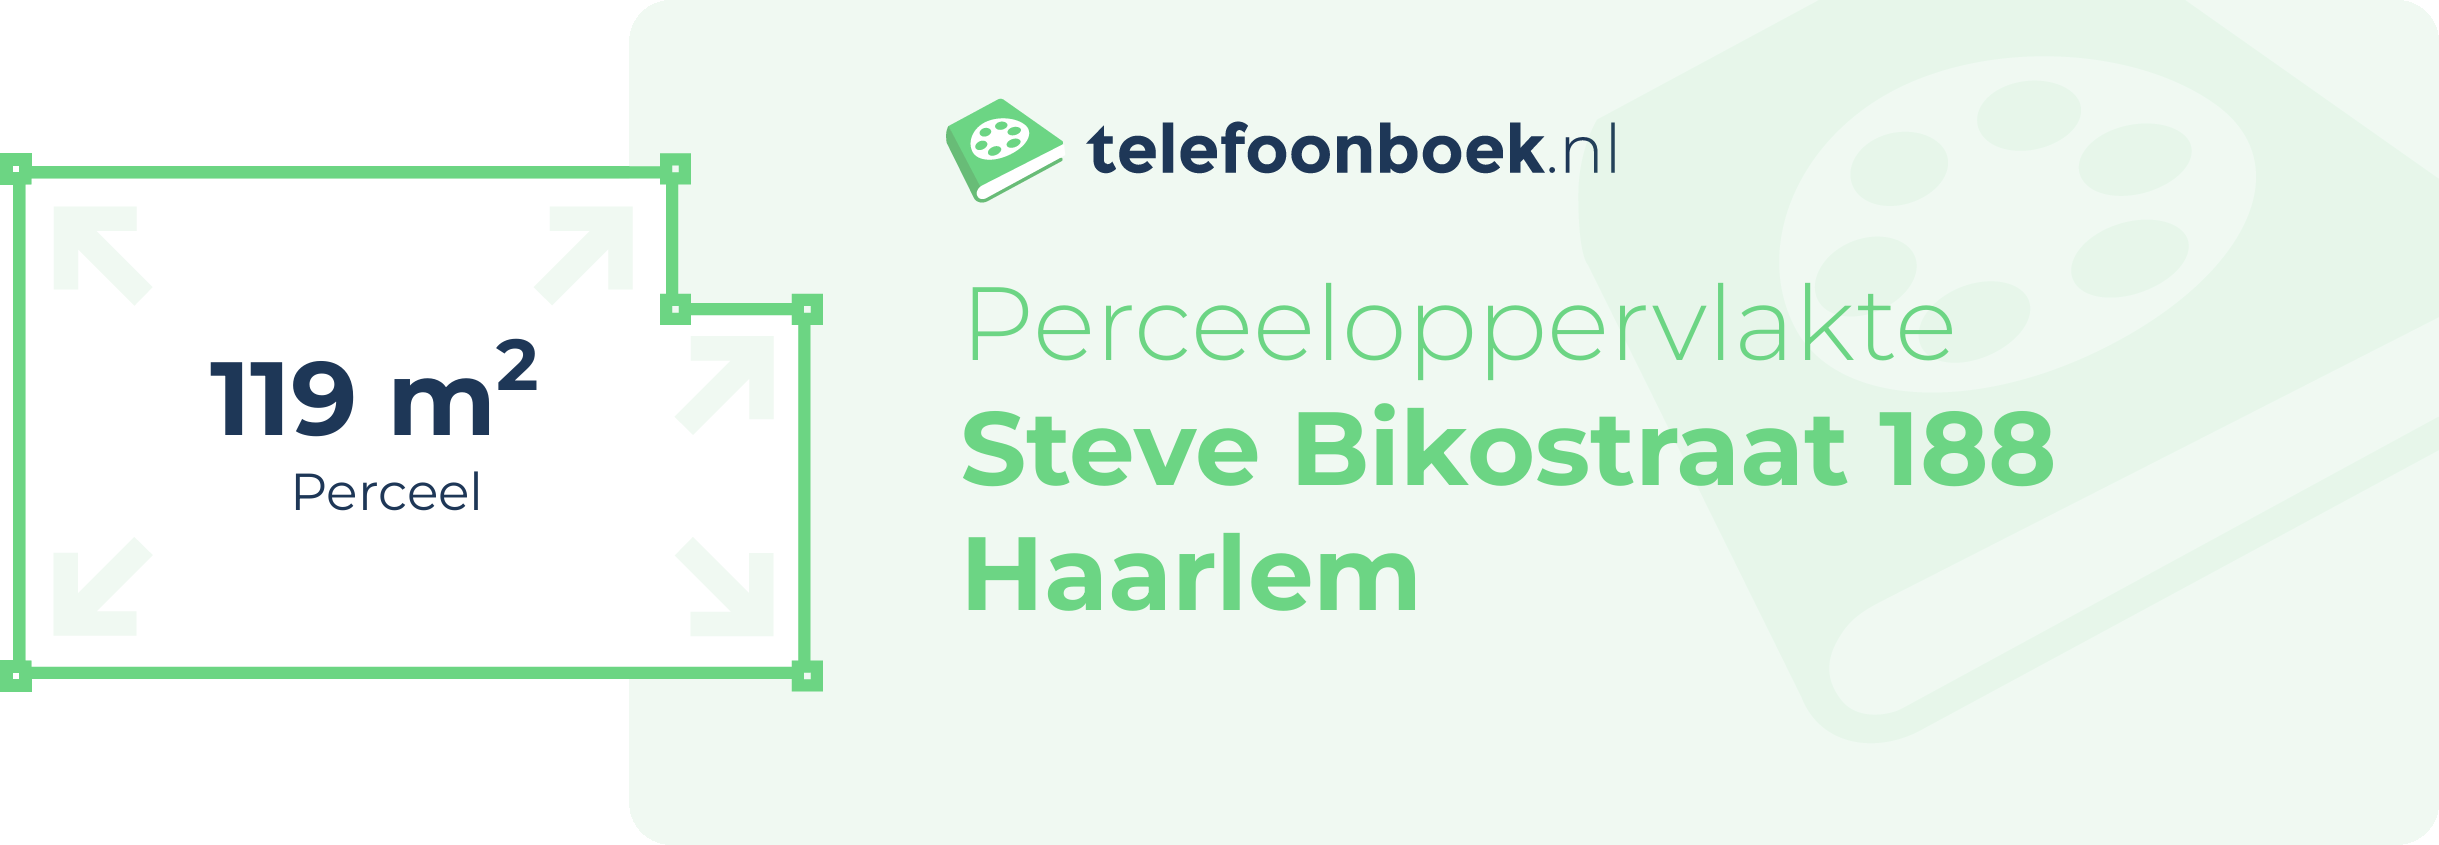 Perceeloppervlakte Steve Bikostraat 188 Haarlem